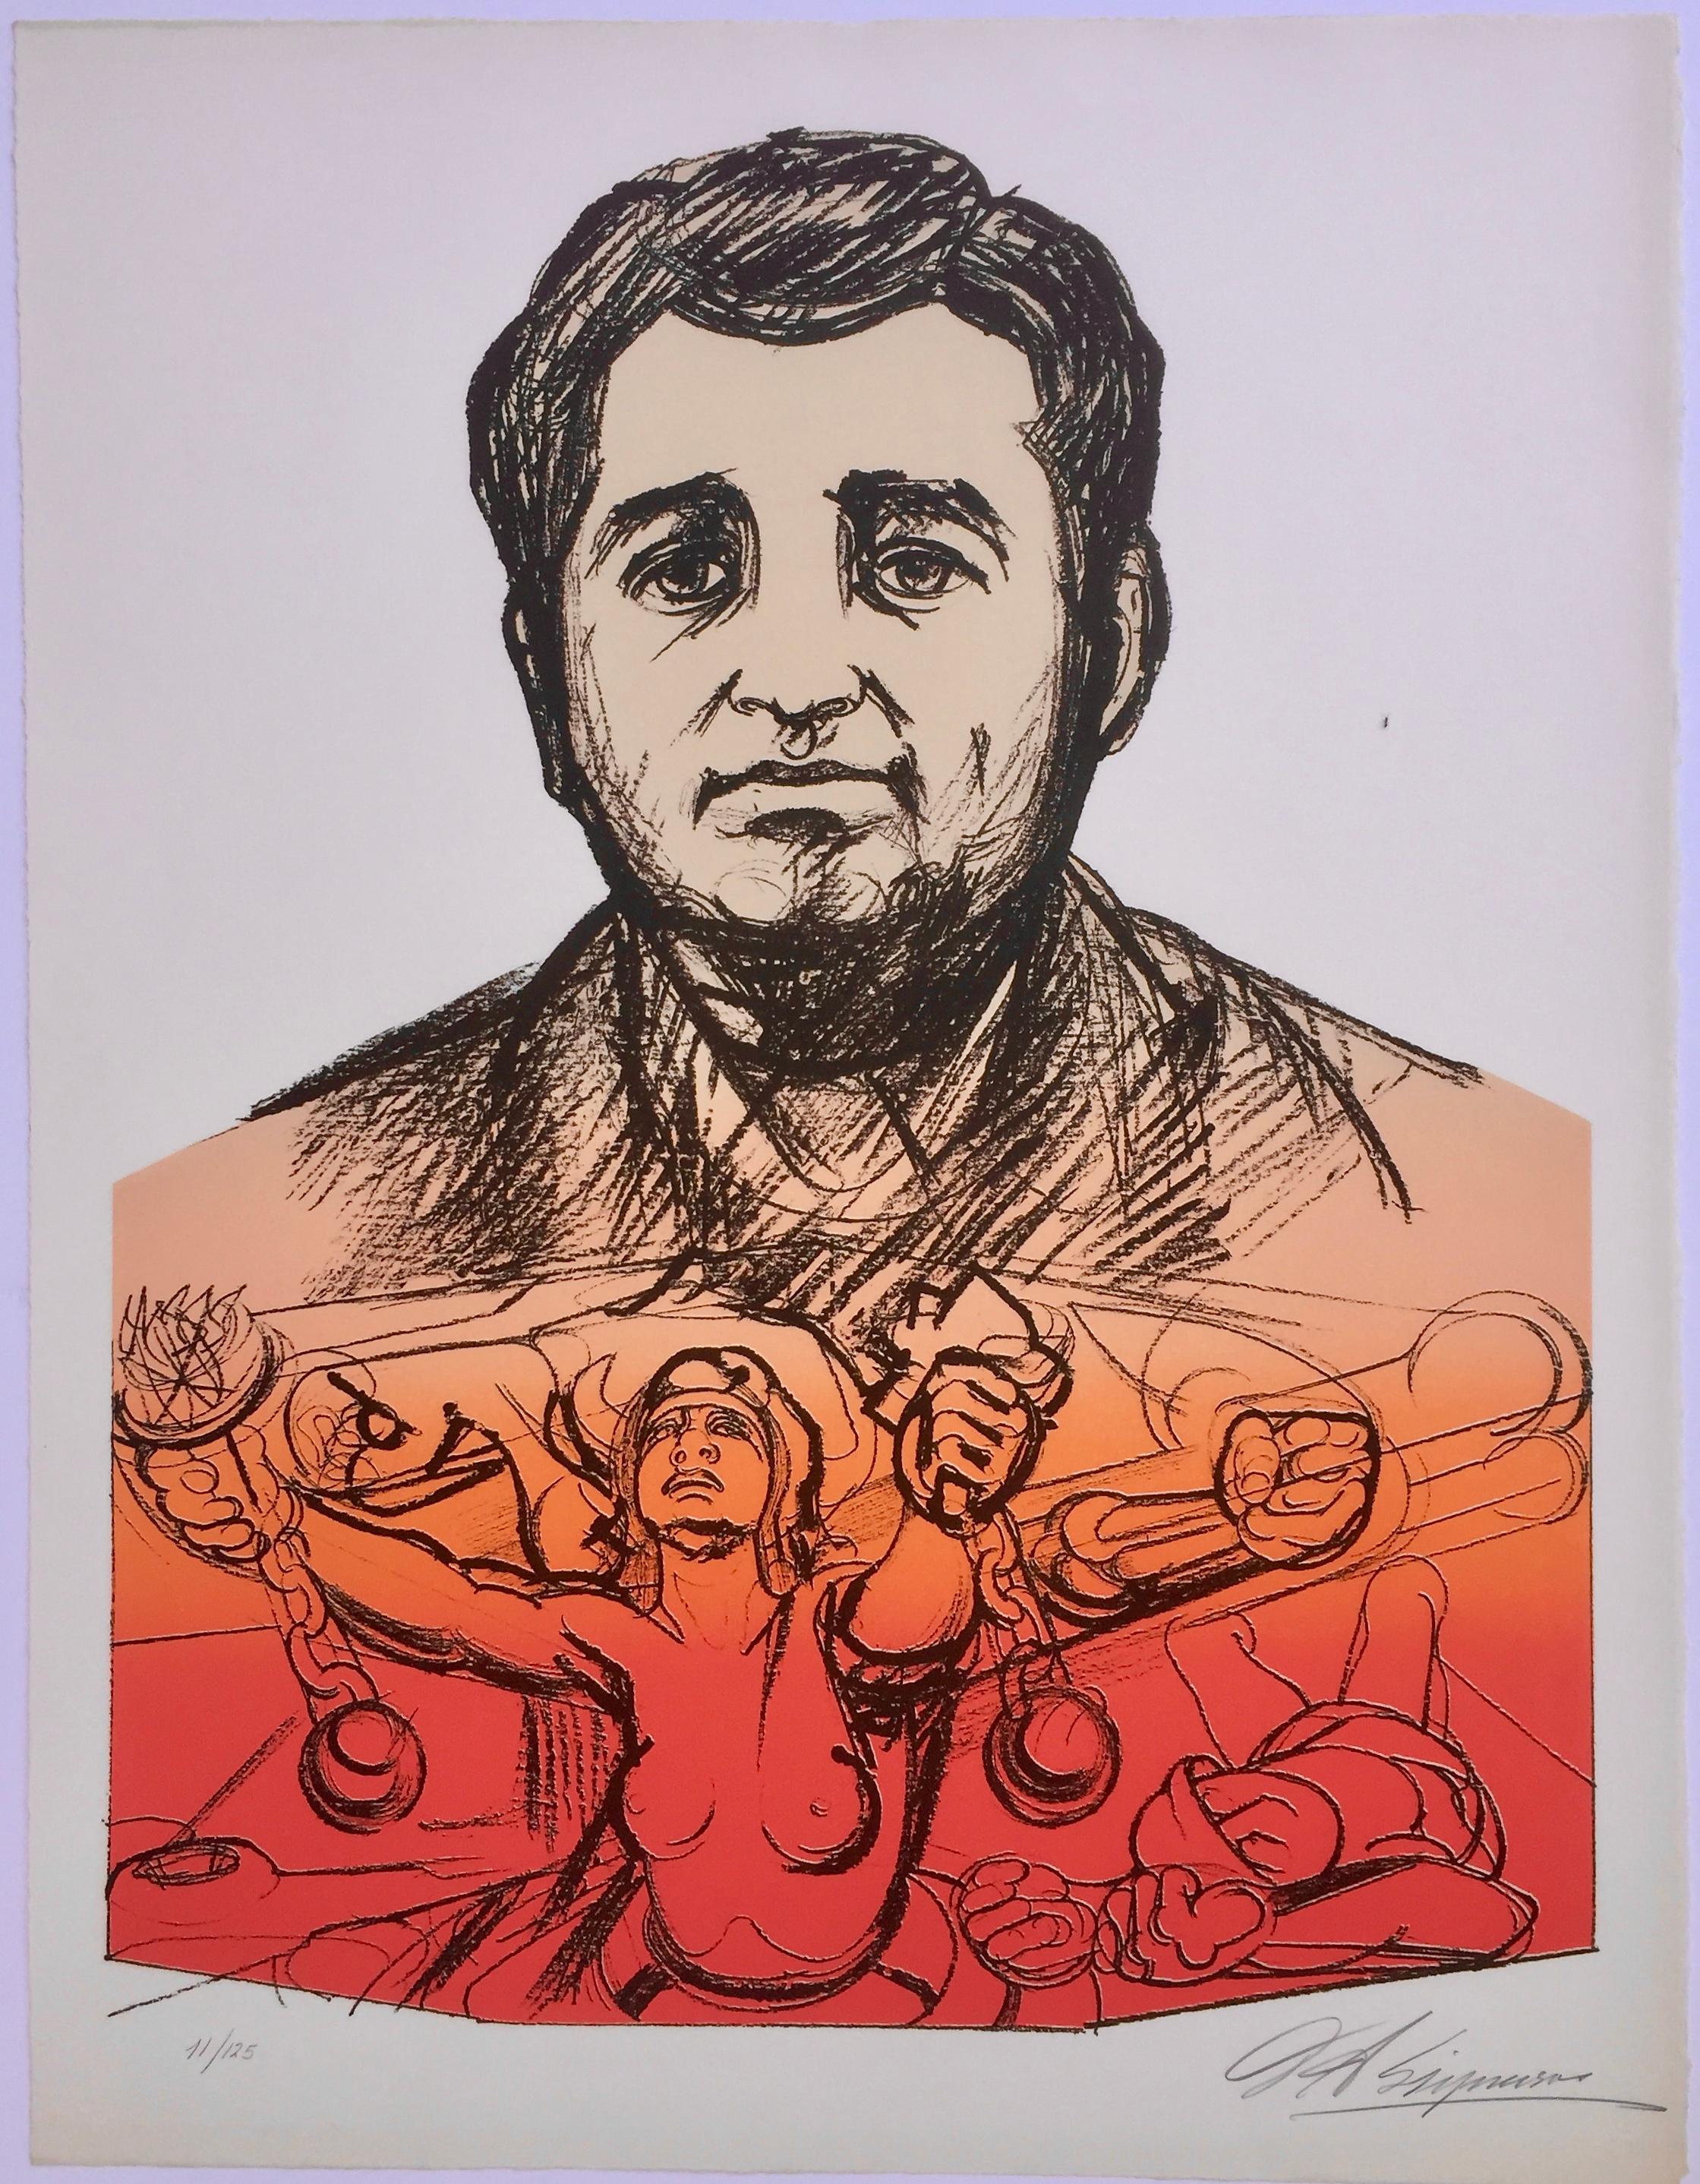 David Alfaro Siqueiros Figurative Print - HEROIC VOICE - Ruben Salazar Killed by LA Police in 1970 - Period Poster